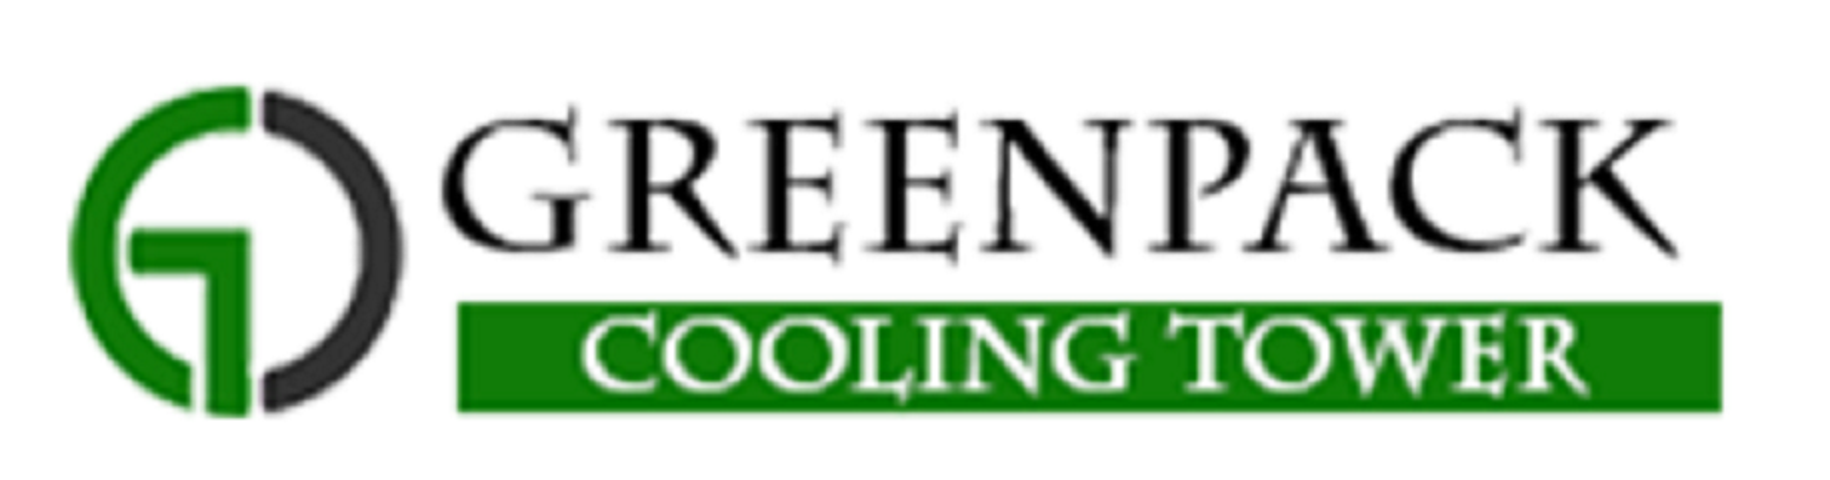 greenpack Cooling Towers logo